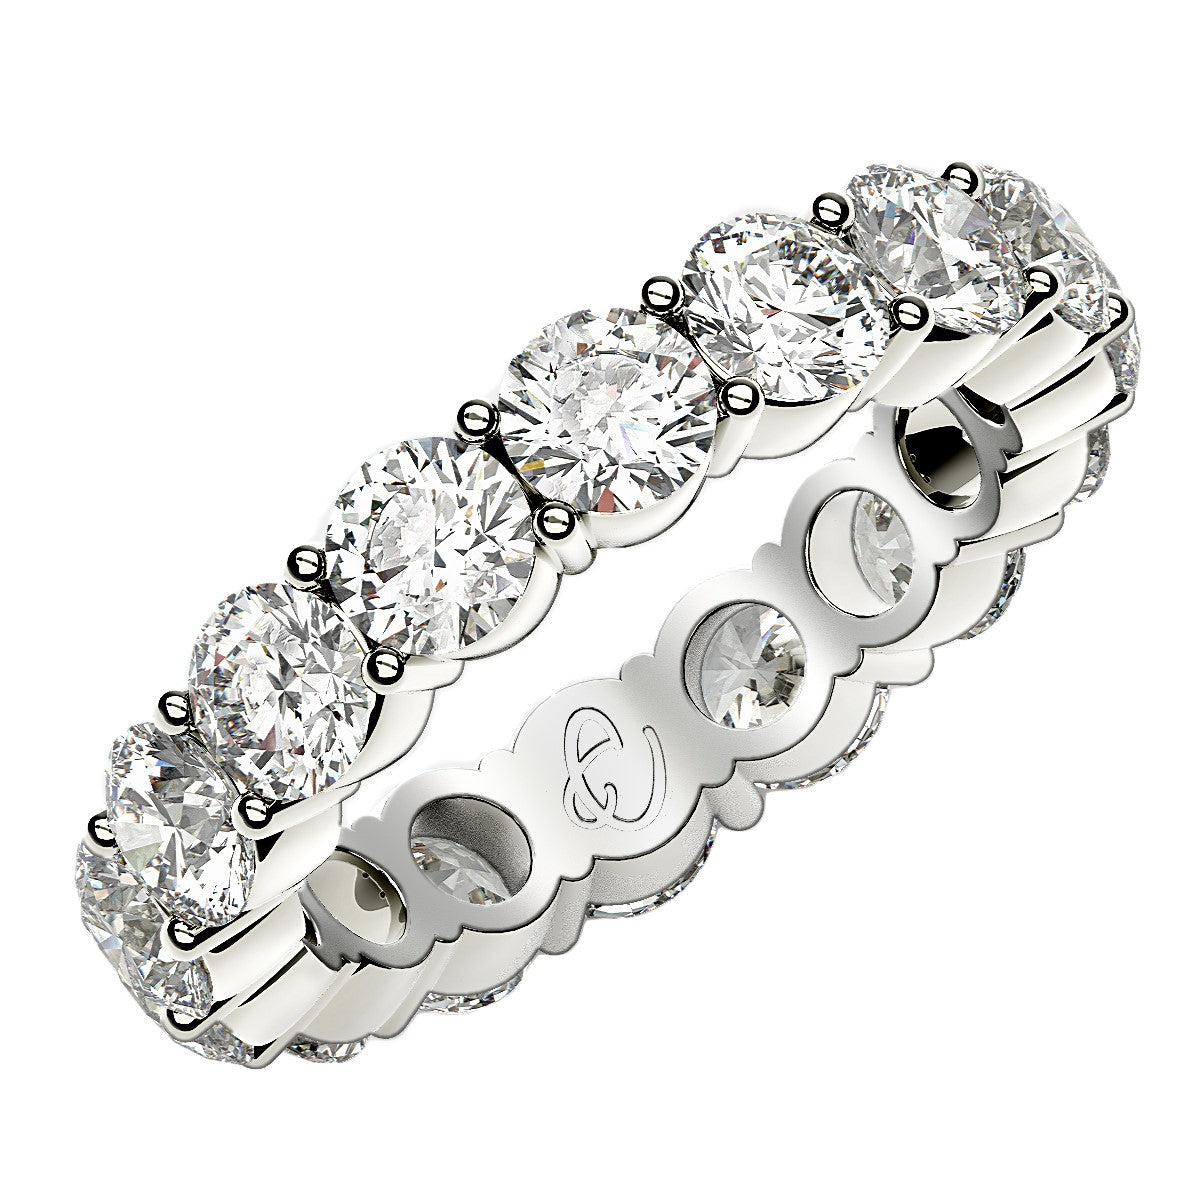 Round Cut Lab Grown Diamond Eternity Ring In 14K White Gold 4 Cttw Fg Vs2 76240-1